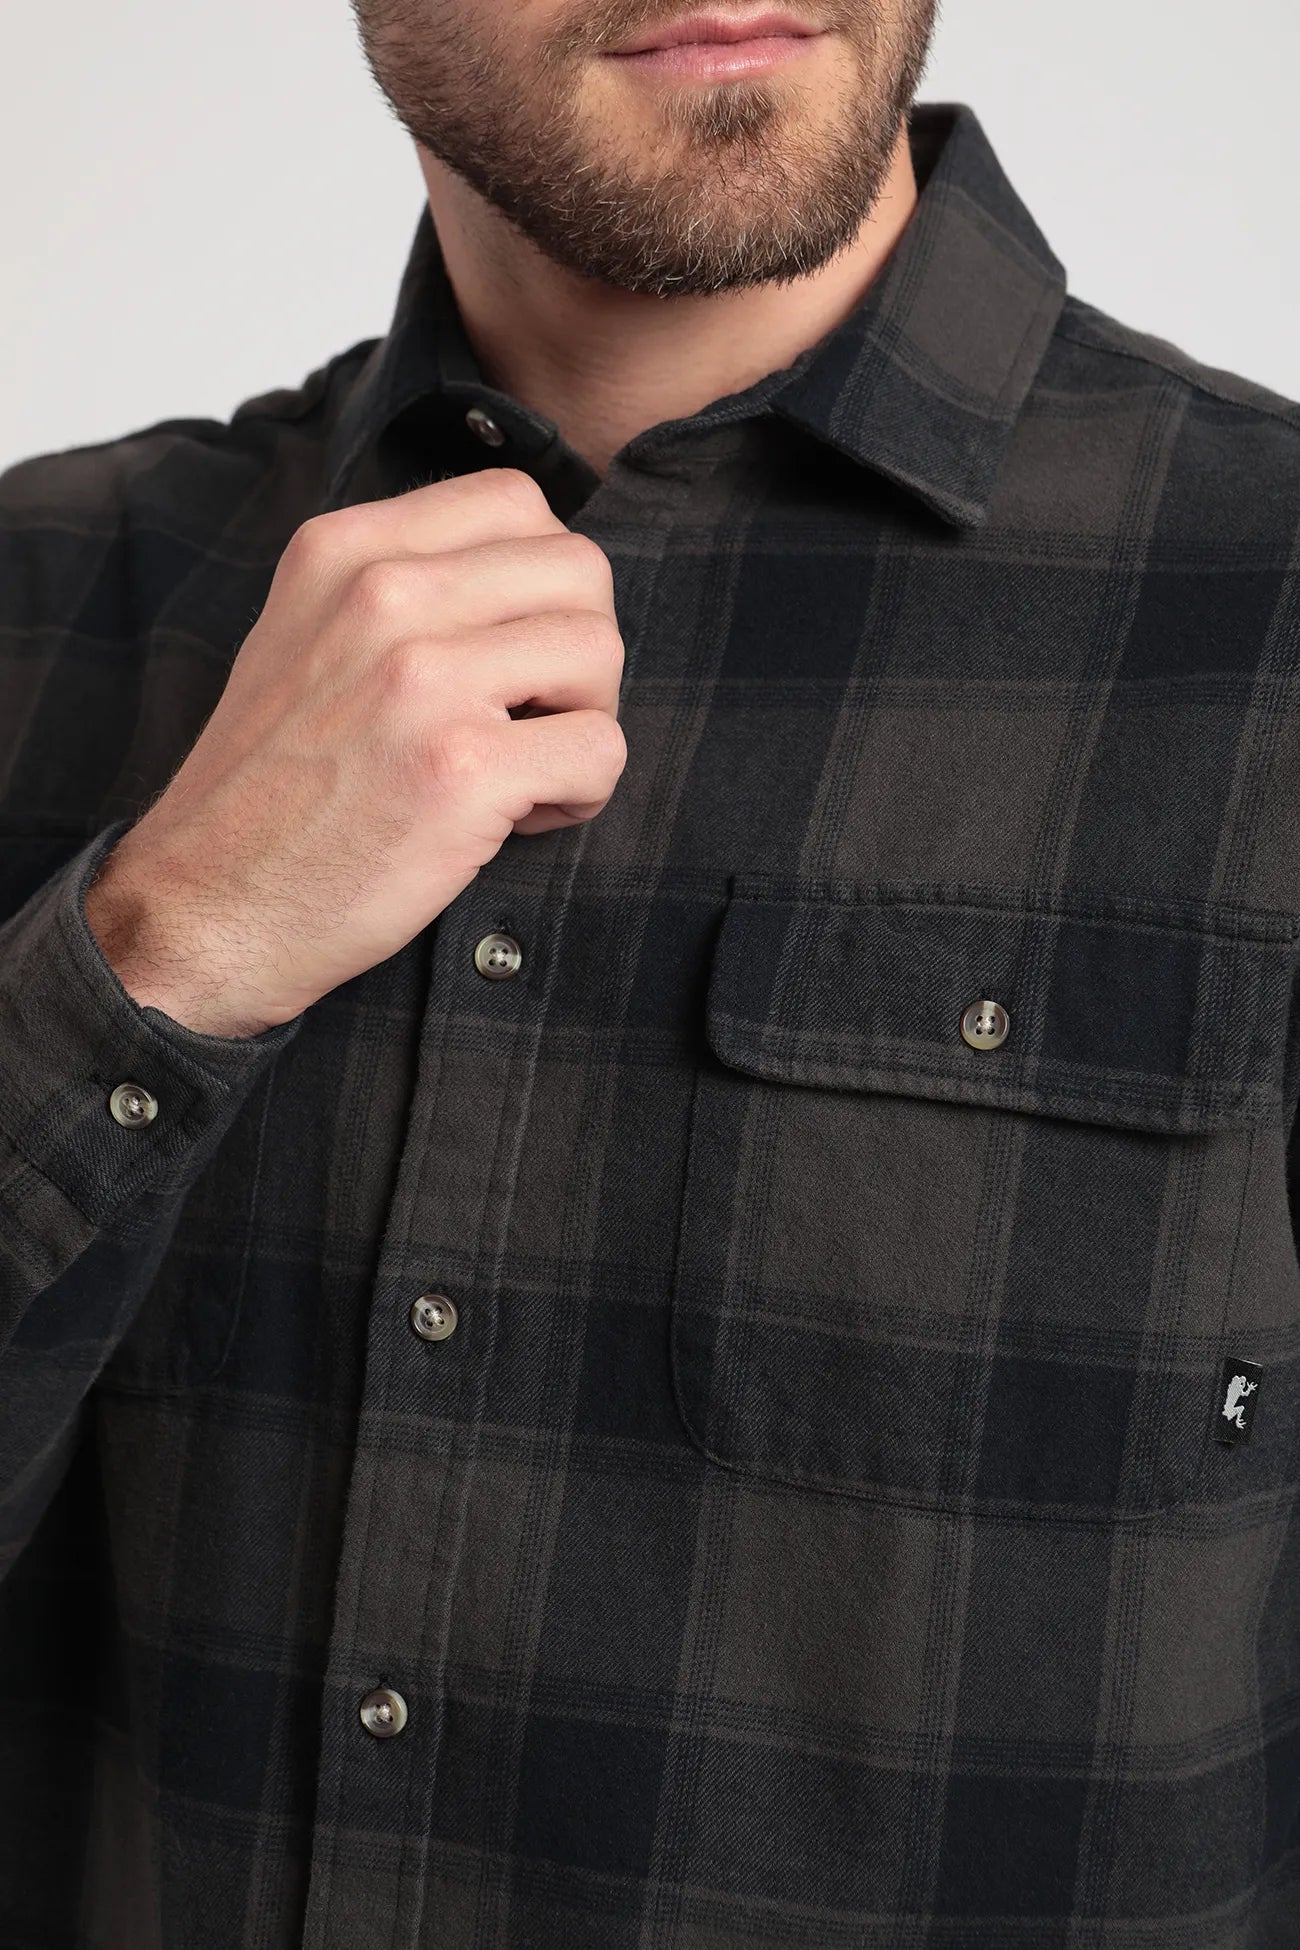 Camisa manga larga hombre Franela negro - Algodón orgánico flanel